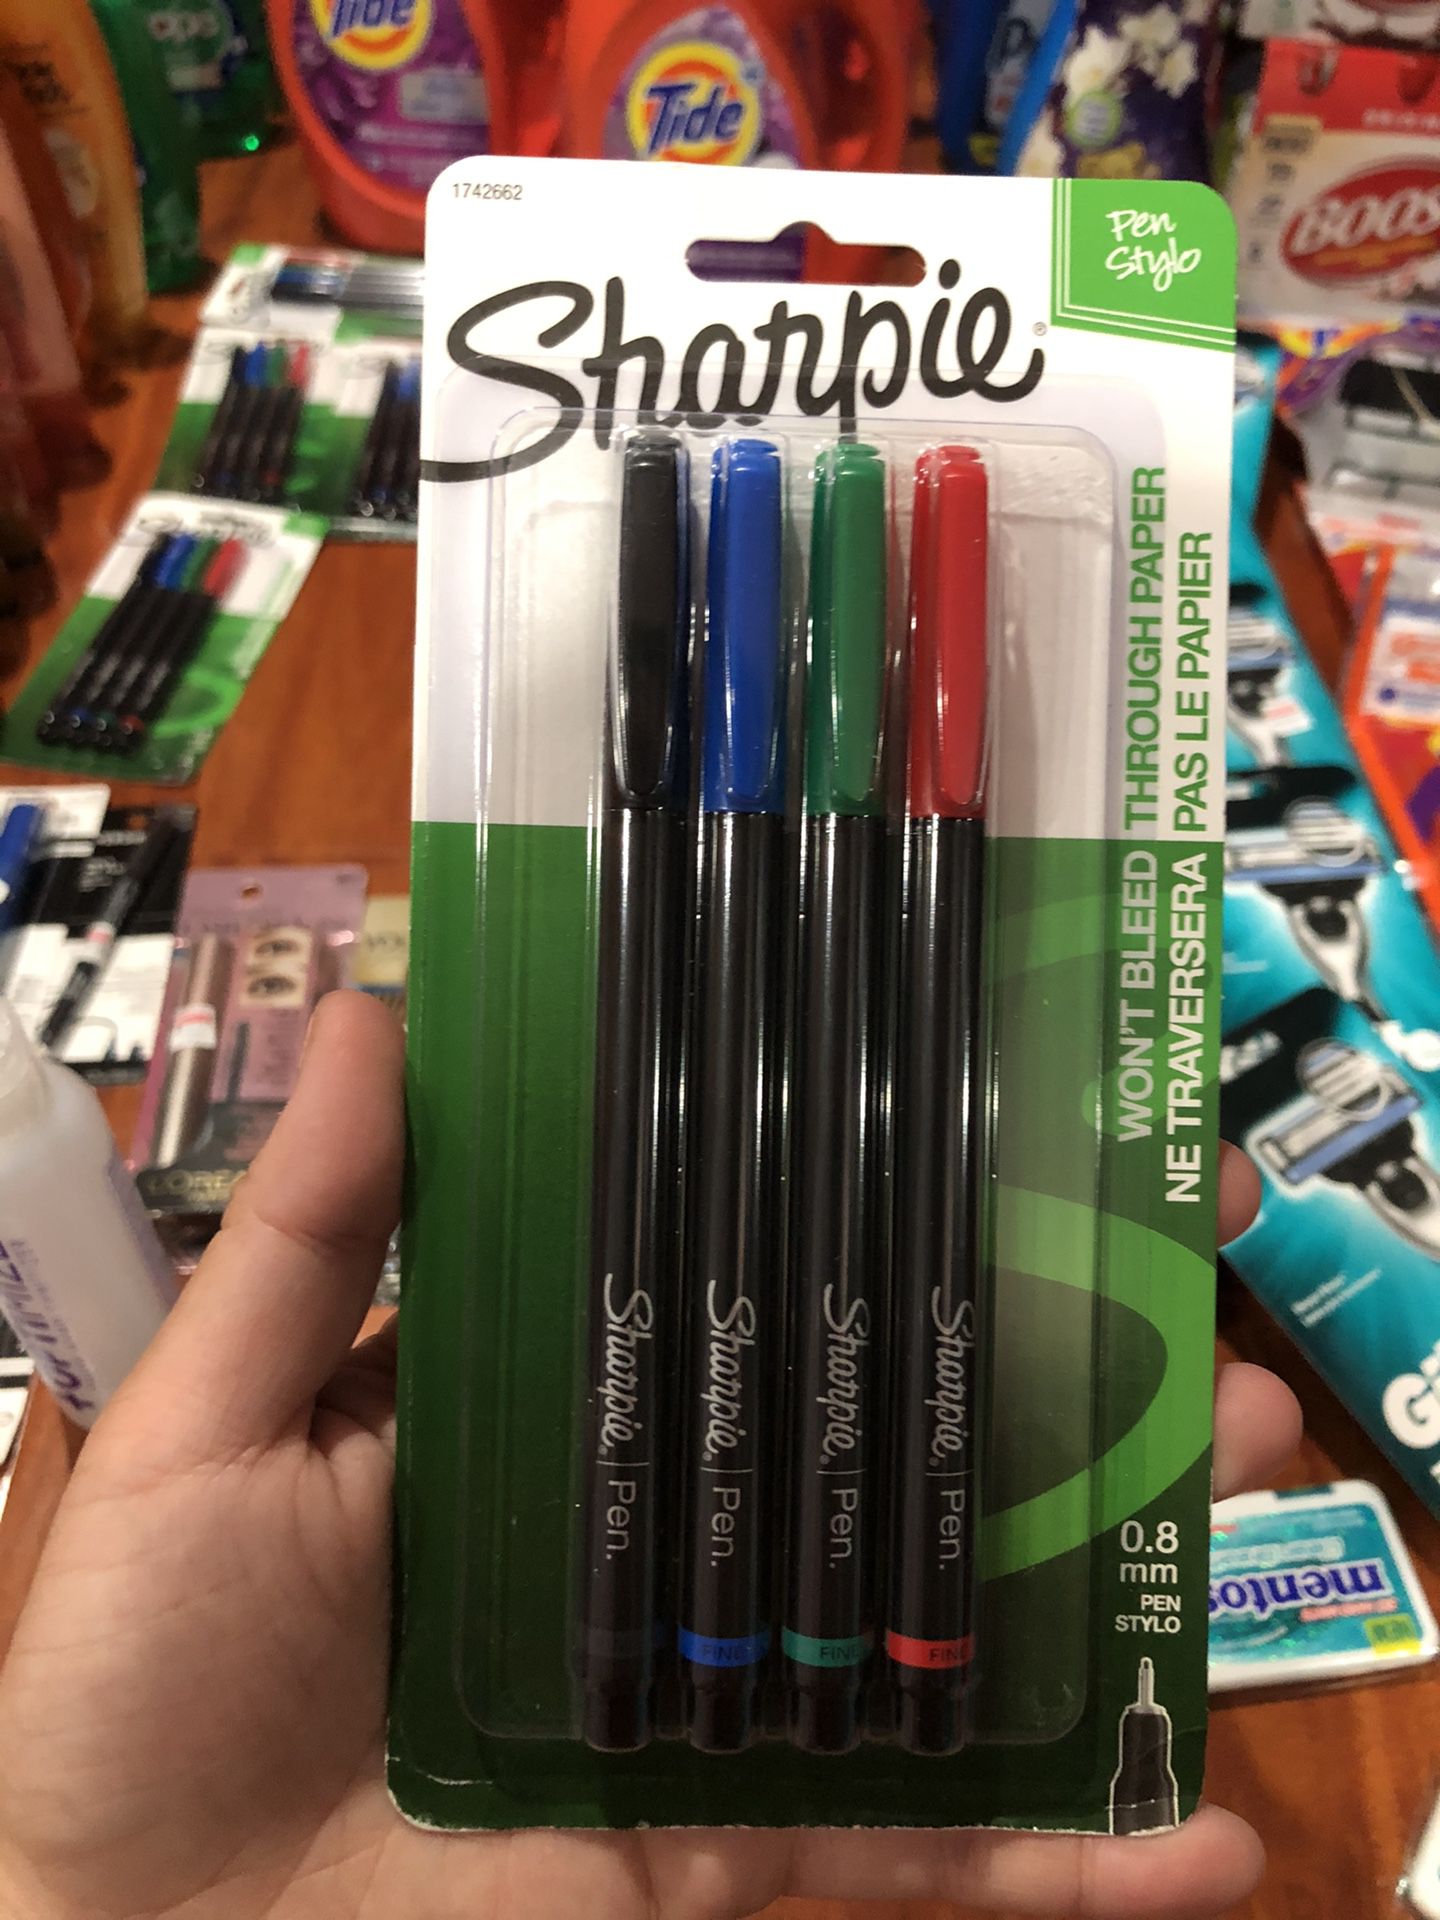 Sharpie Pen Style 0.8m